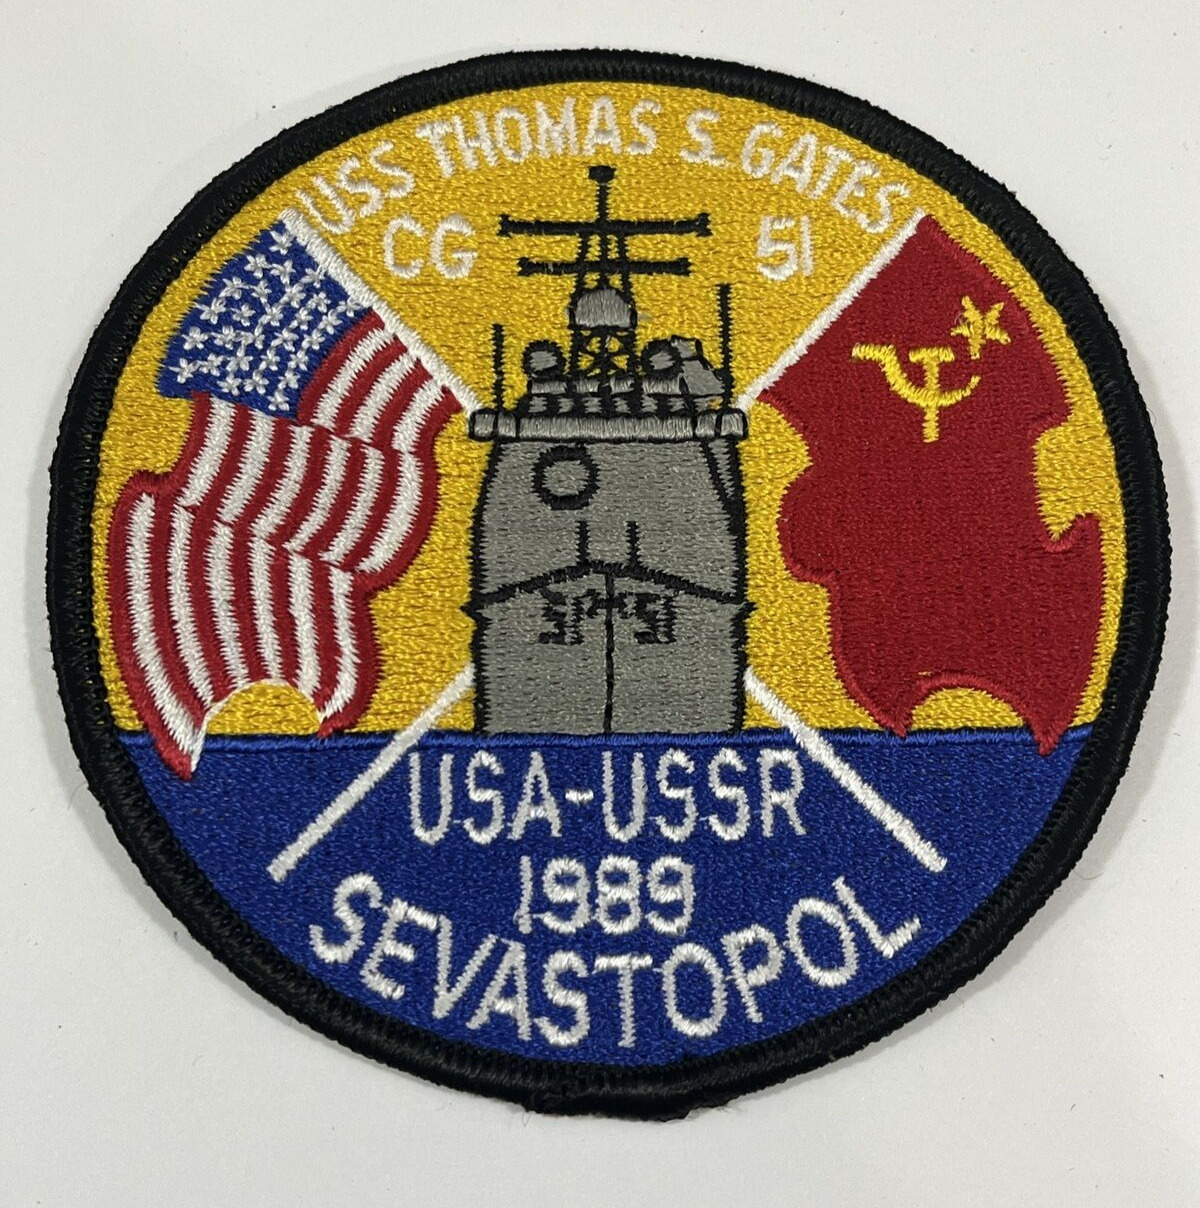 USS Thomas S Gates CG-51 USA-USSR 1989 SEVASTOPOL Patch